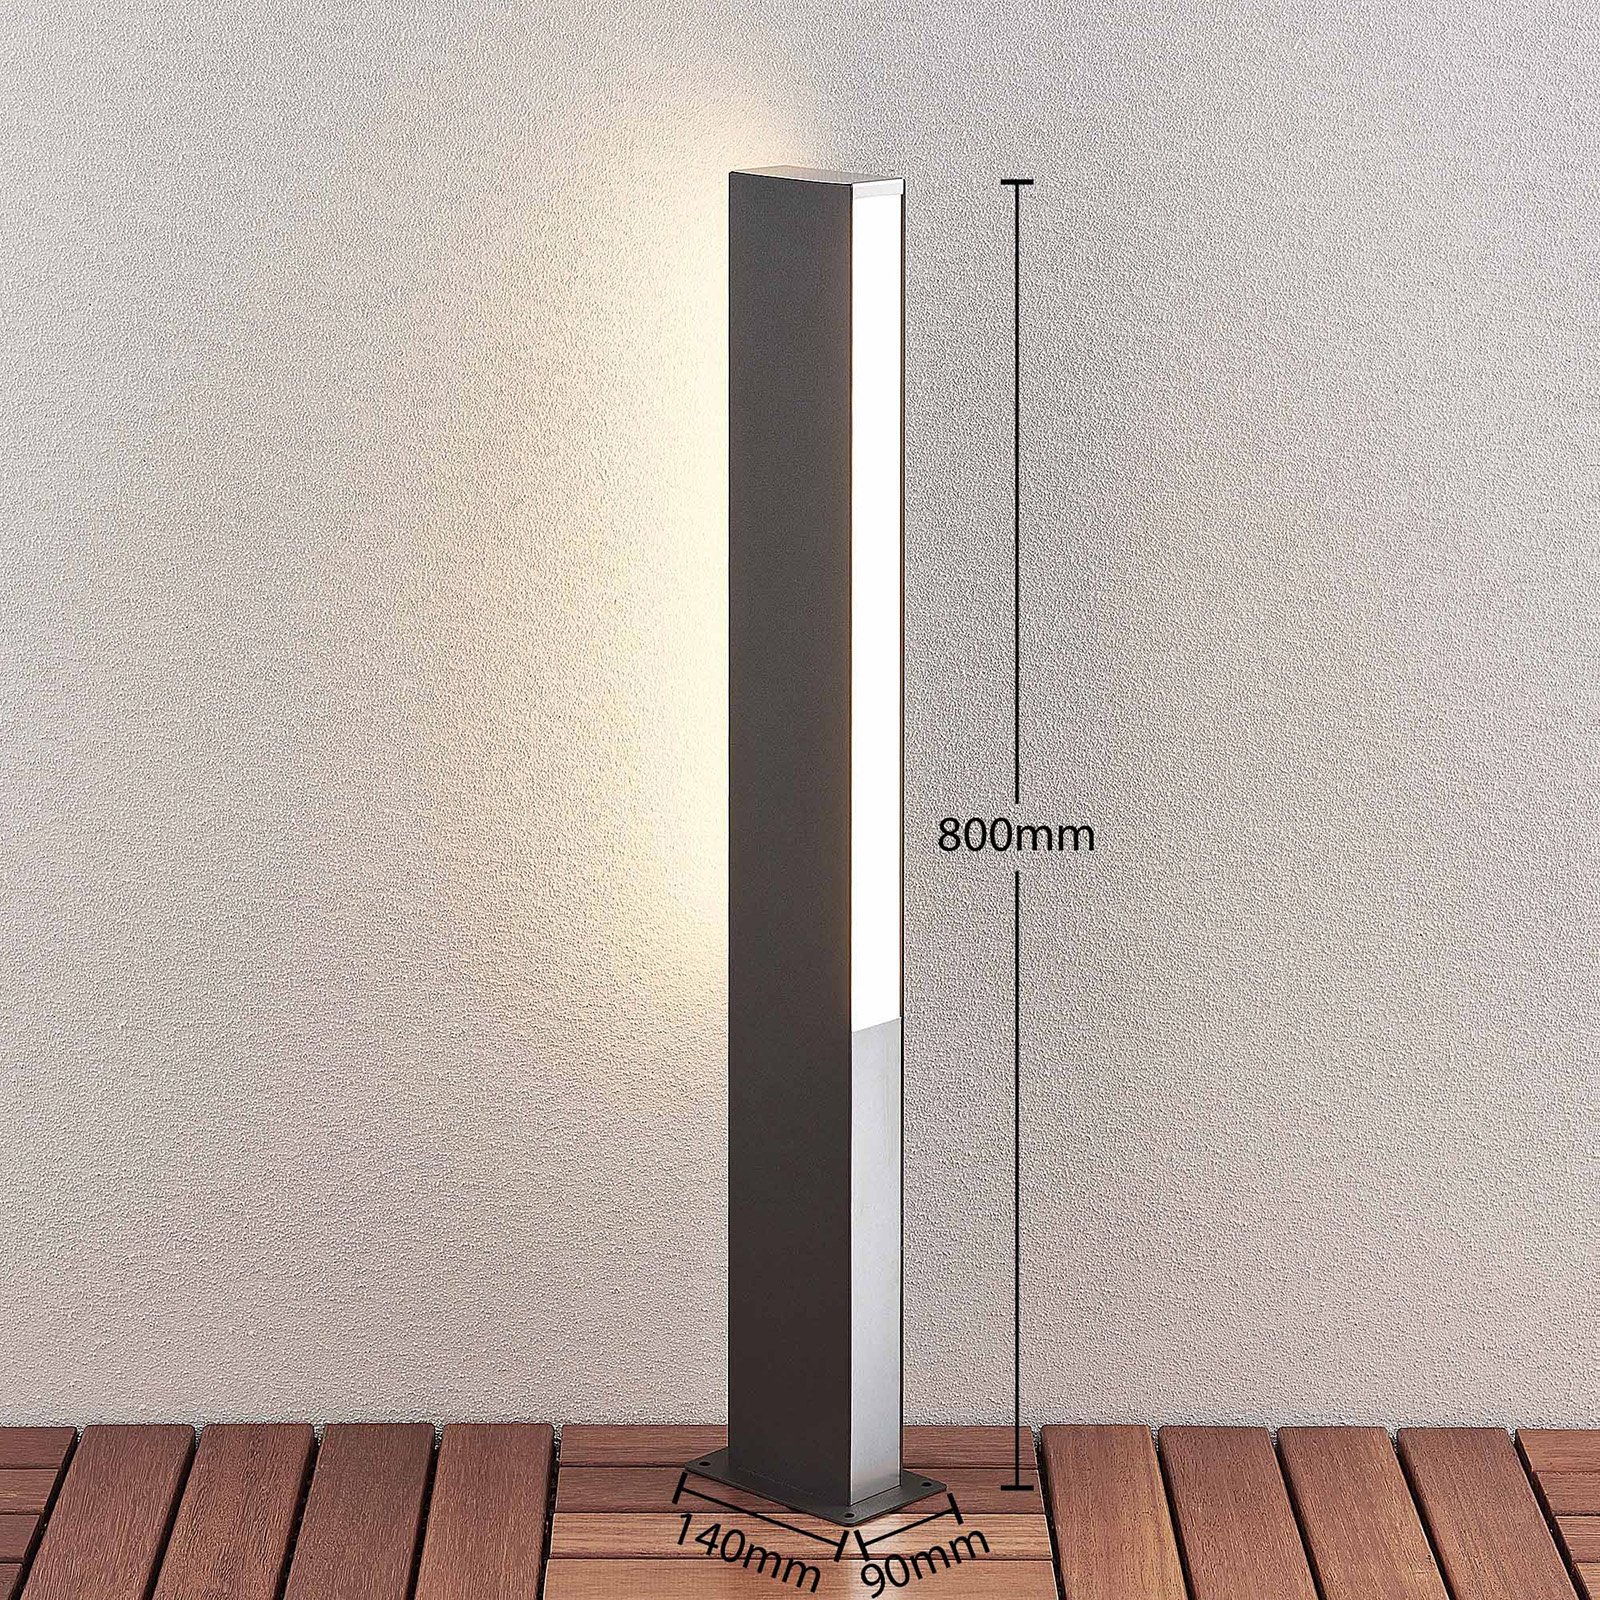 Lucande Aegisa słupek oświetleniowy LED, 80 cm